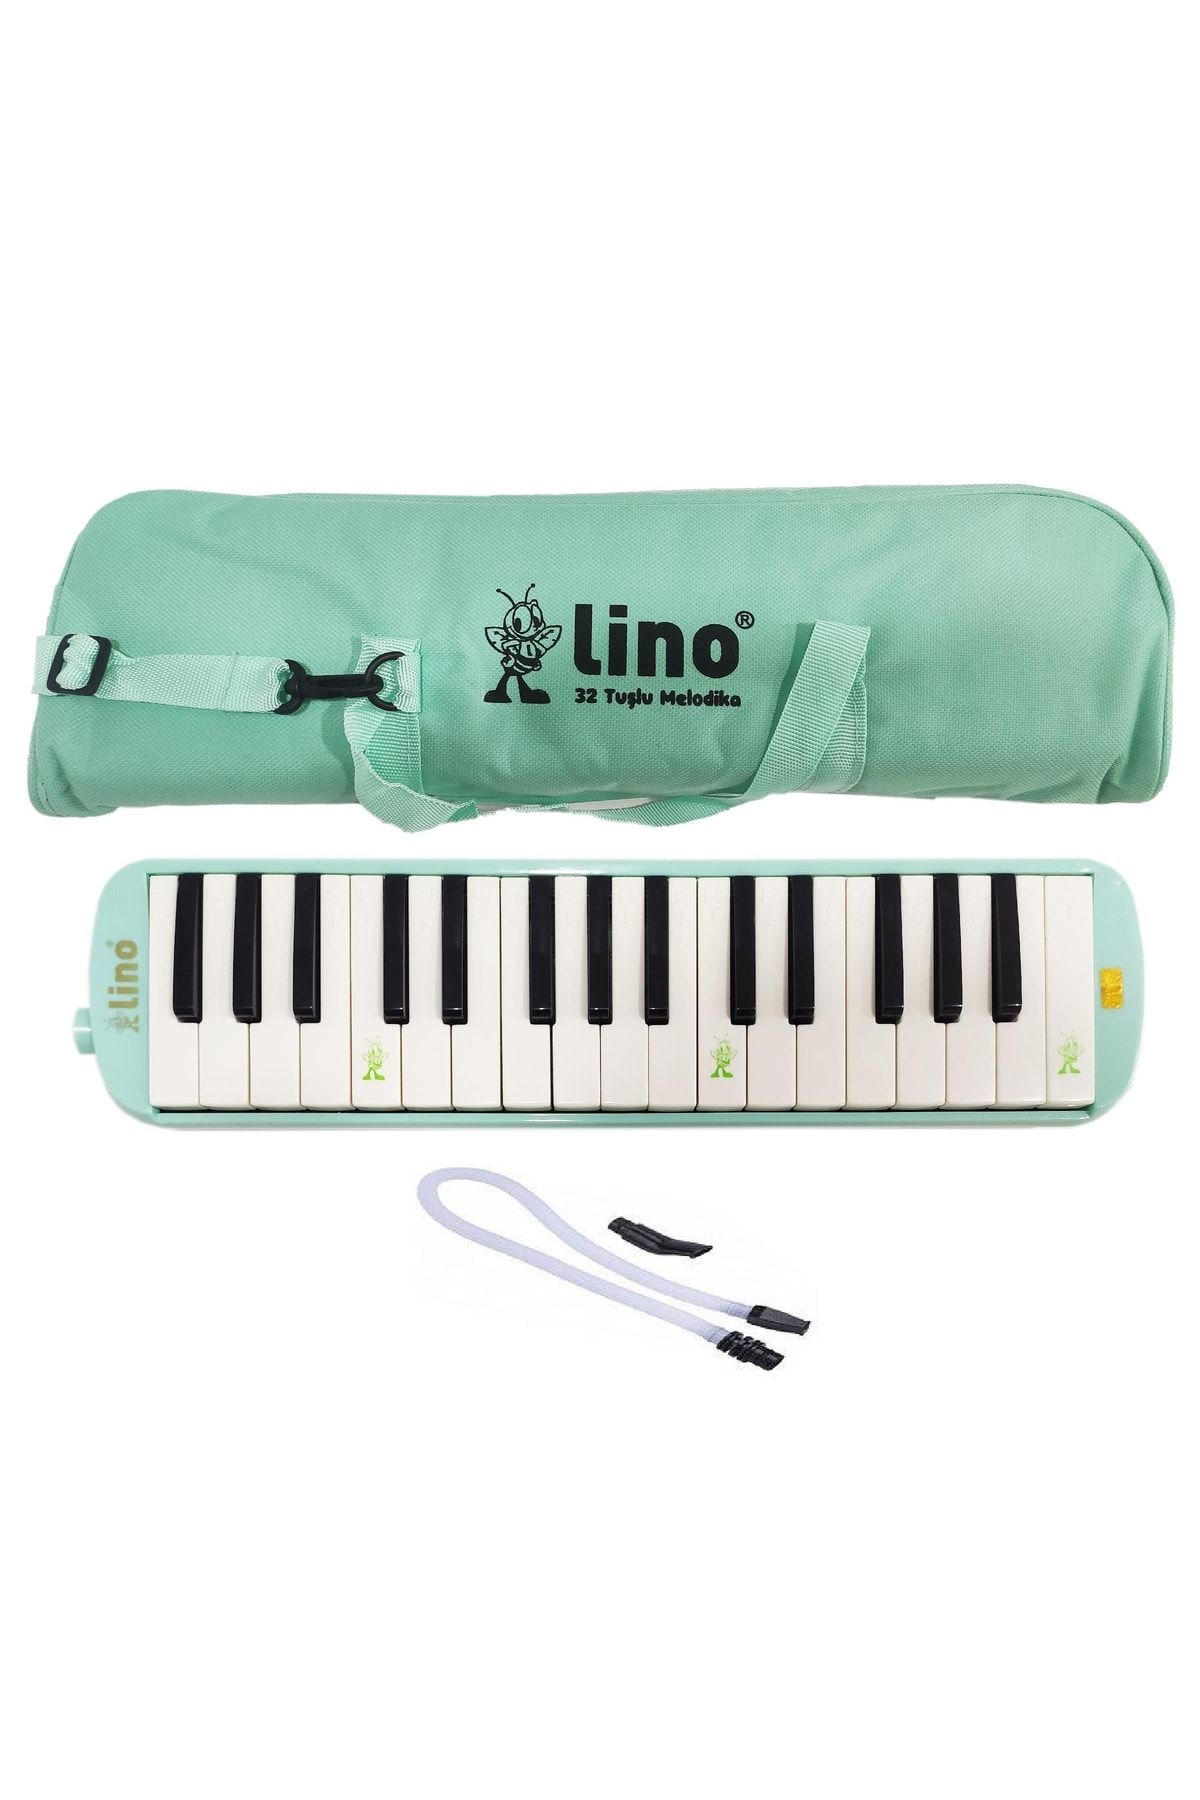 Lino 32 Tuşlu Melodika Bez Çanta Pastel Yeşil